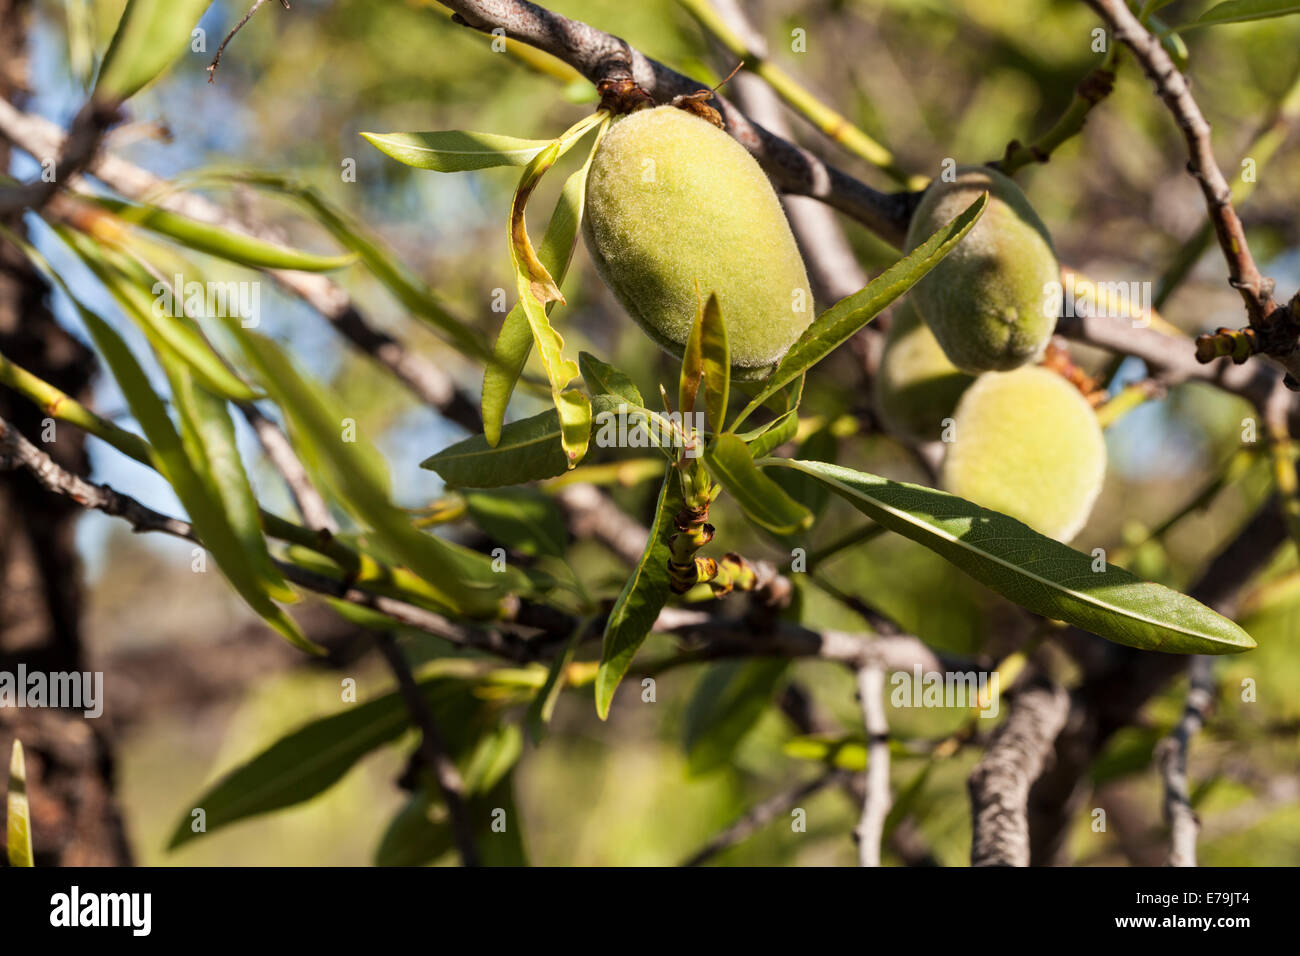 Prunus dulcis almond fruit on a tree in Tenerife, Canary Islands, Spain Stock Photo